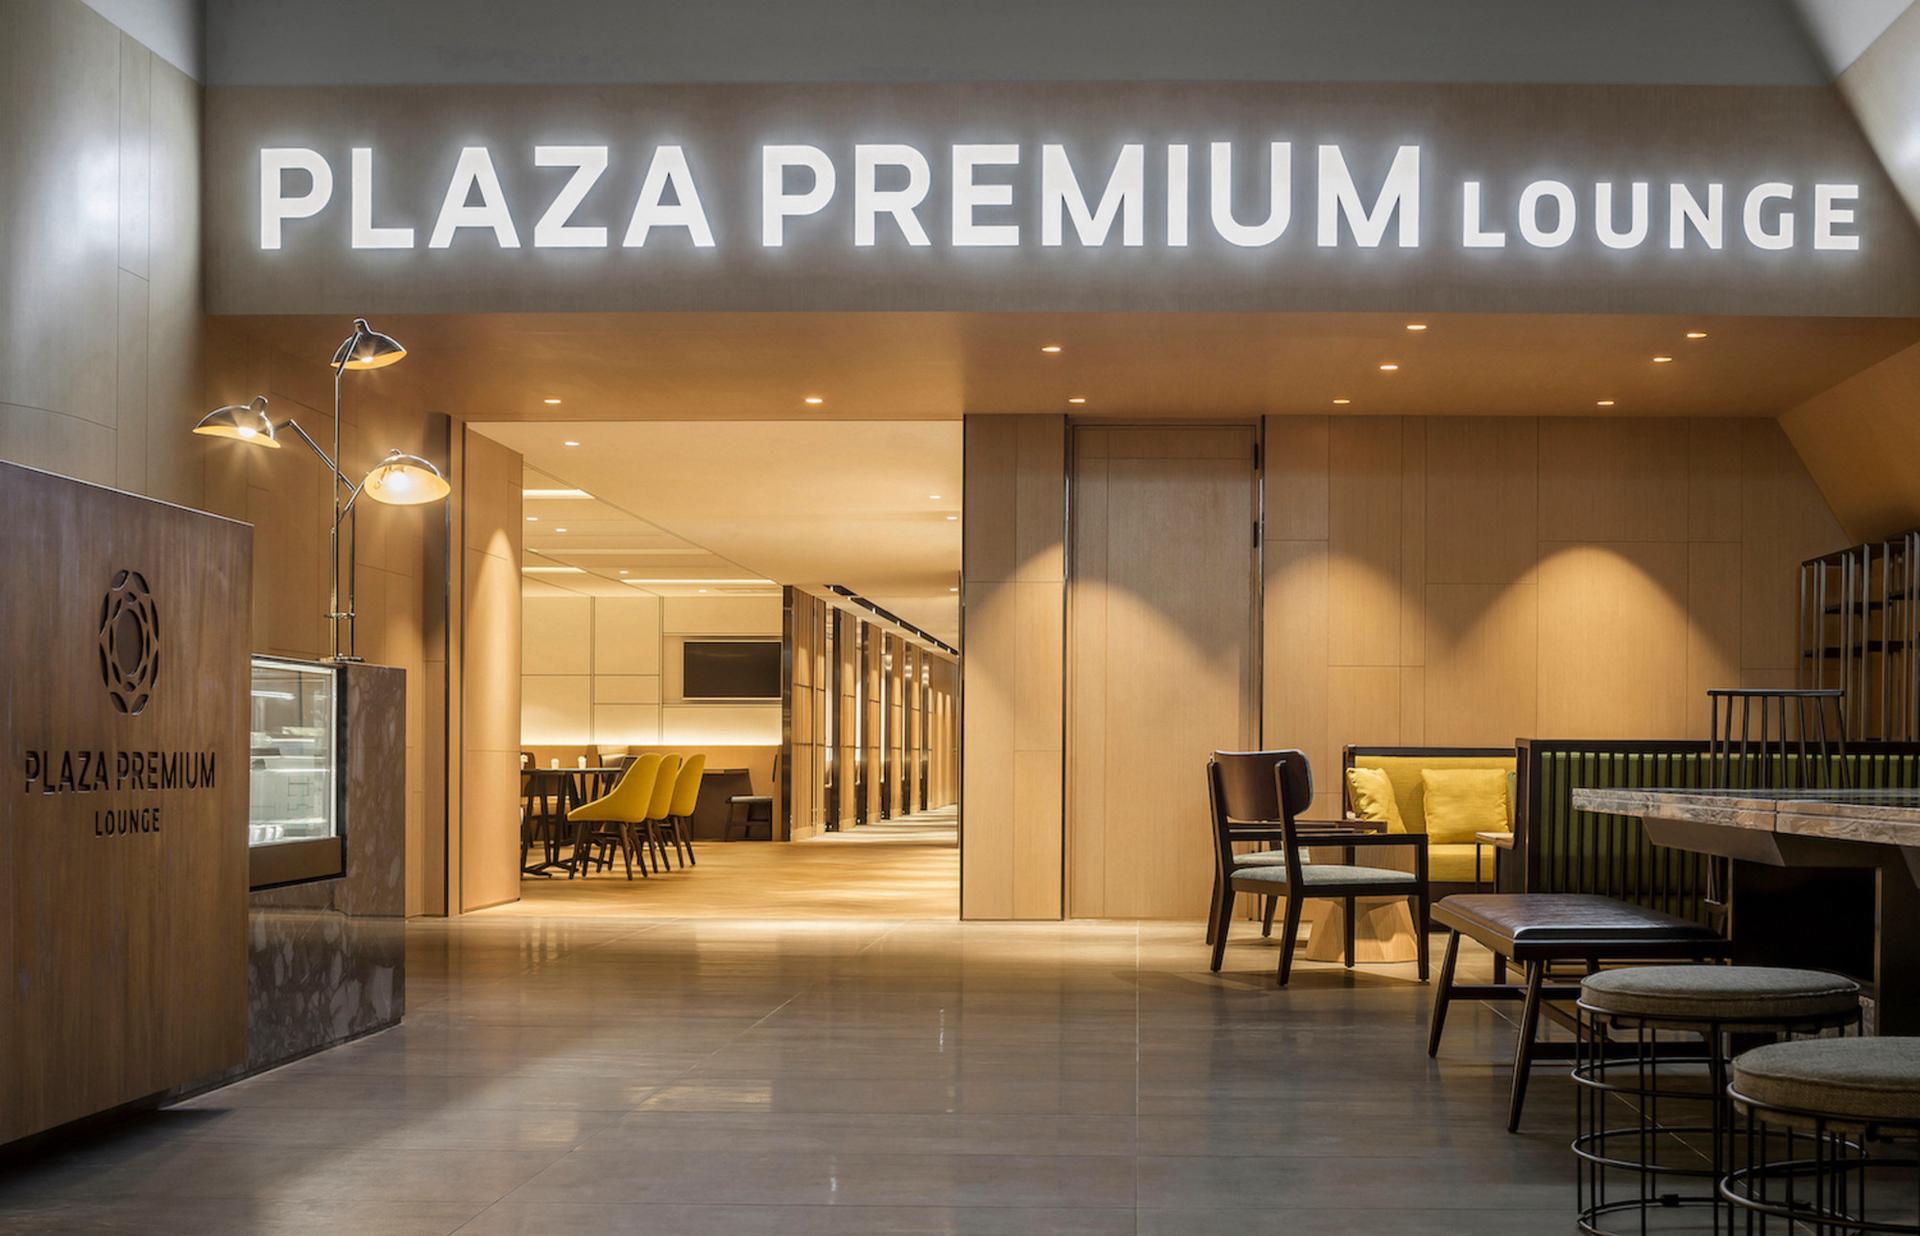 Plaza Premium Lounge (Zone A) image 65 of 79